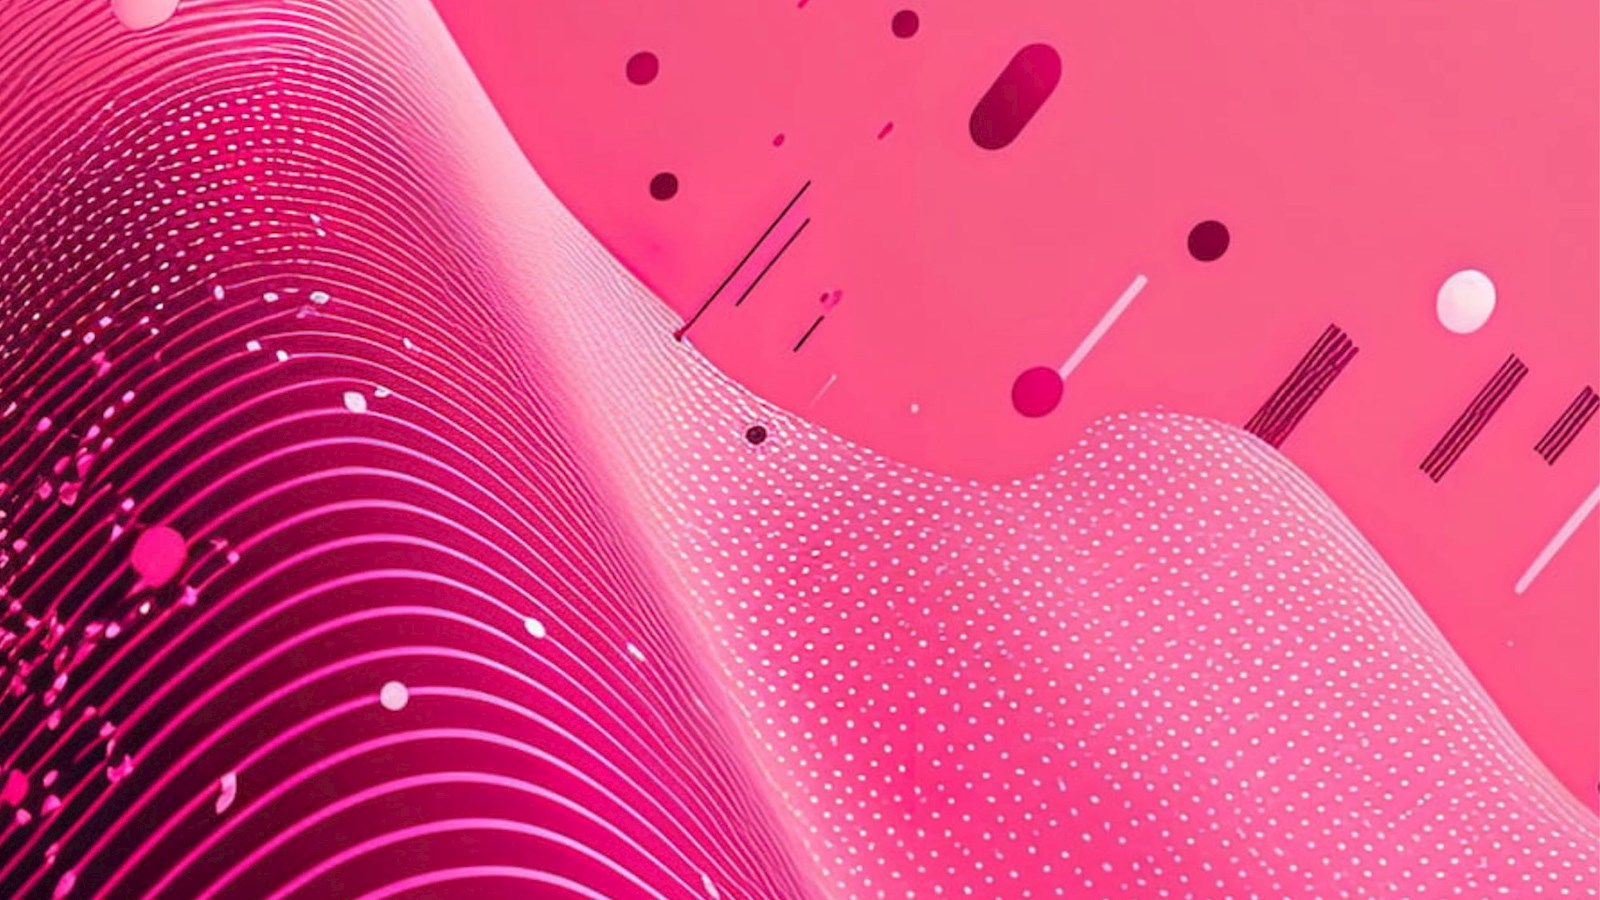 Pattern on pink background